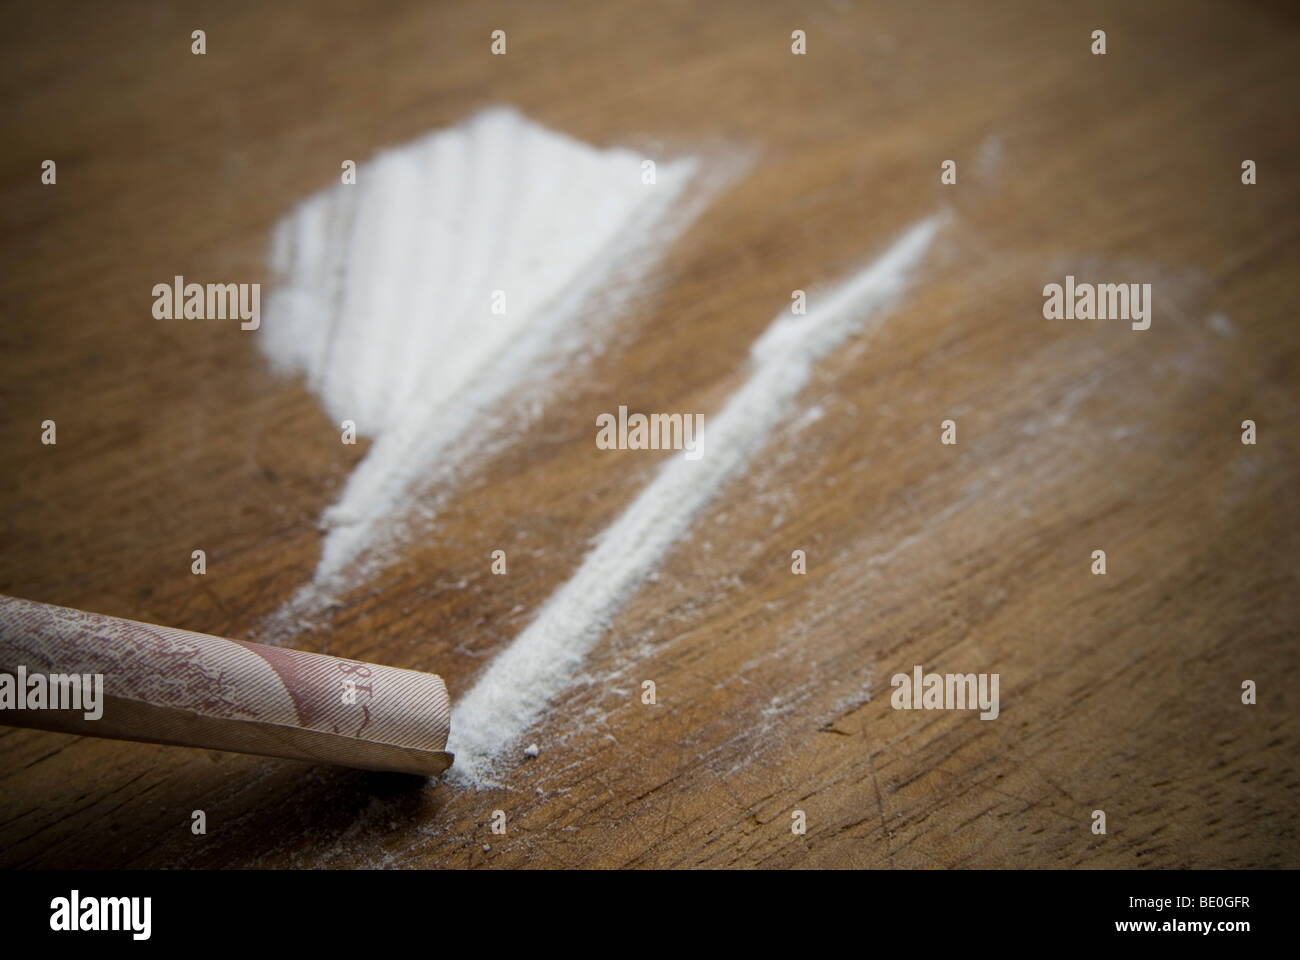 Medikamente, Drogen eine Person Umgang mit Klasse A. Kokain Stockfoto